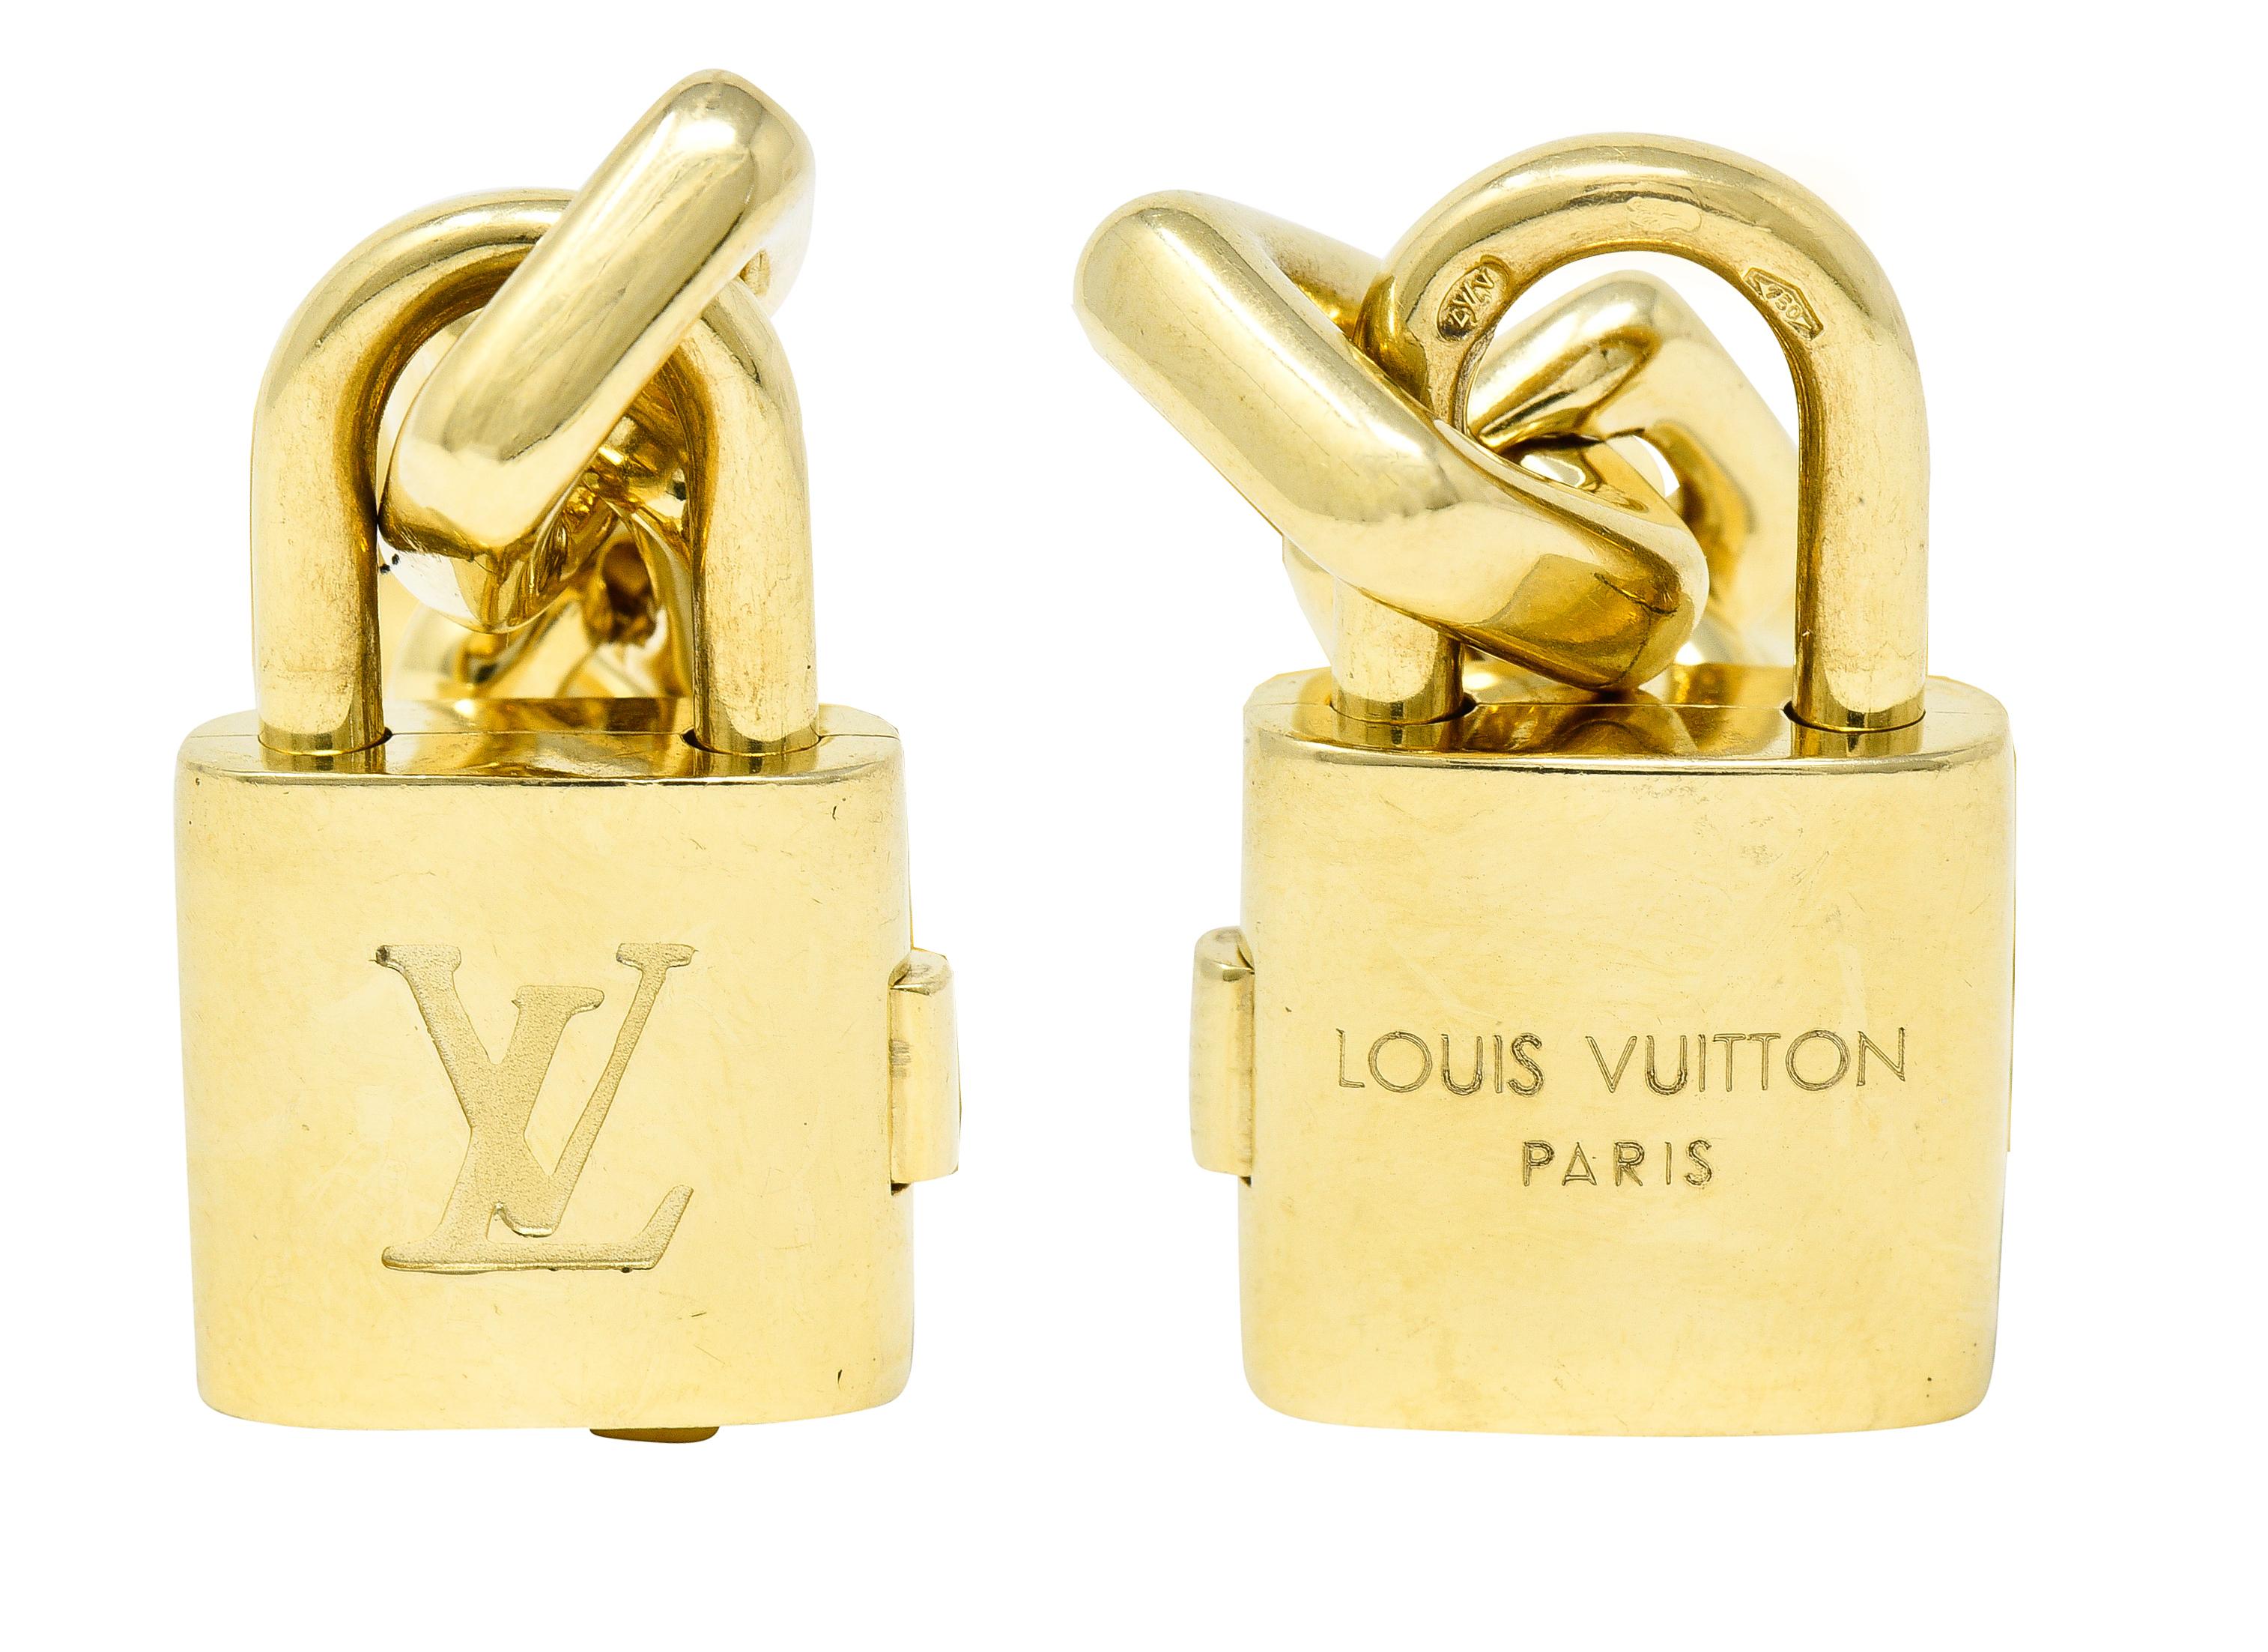 Louis Vuitton Paris 2000s 18 Karat Yellow Gold Square Lock & Key Charm Bracelet 2